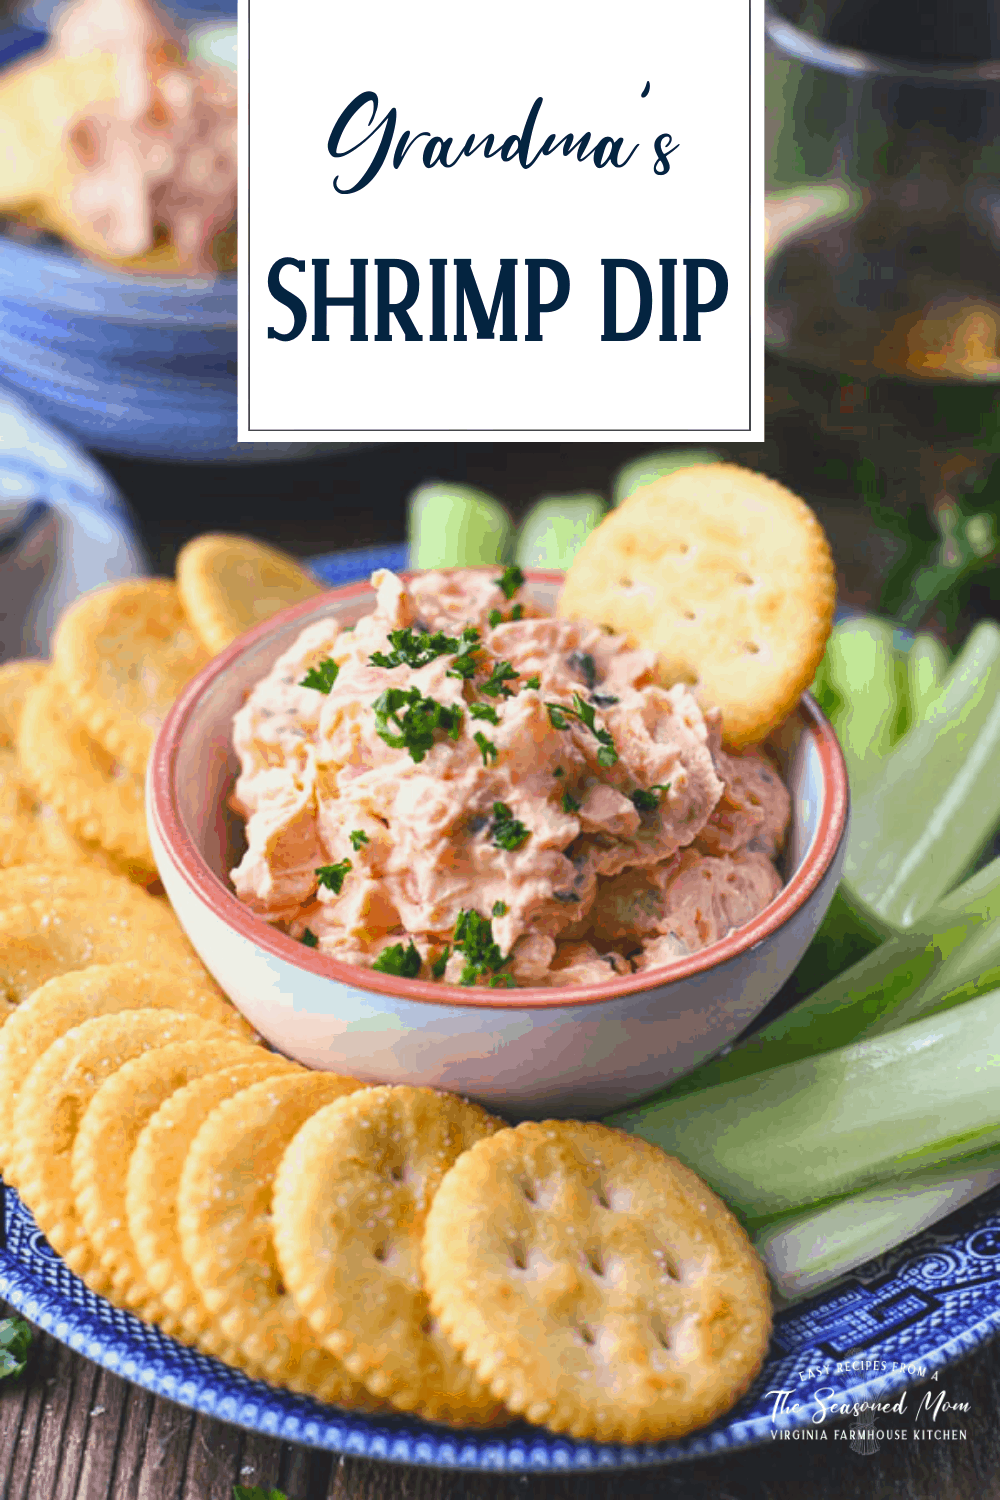 Shrimp Dip - The Seasoned Mom